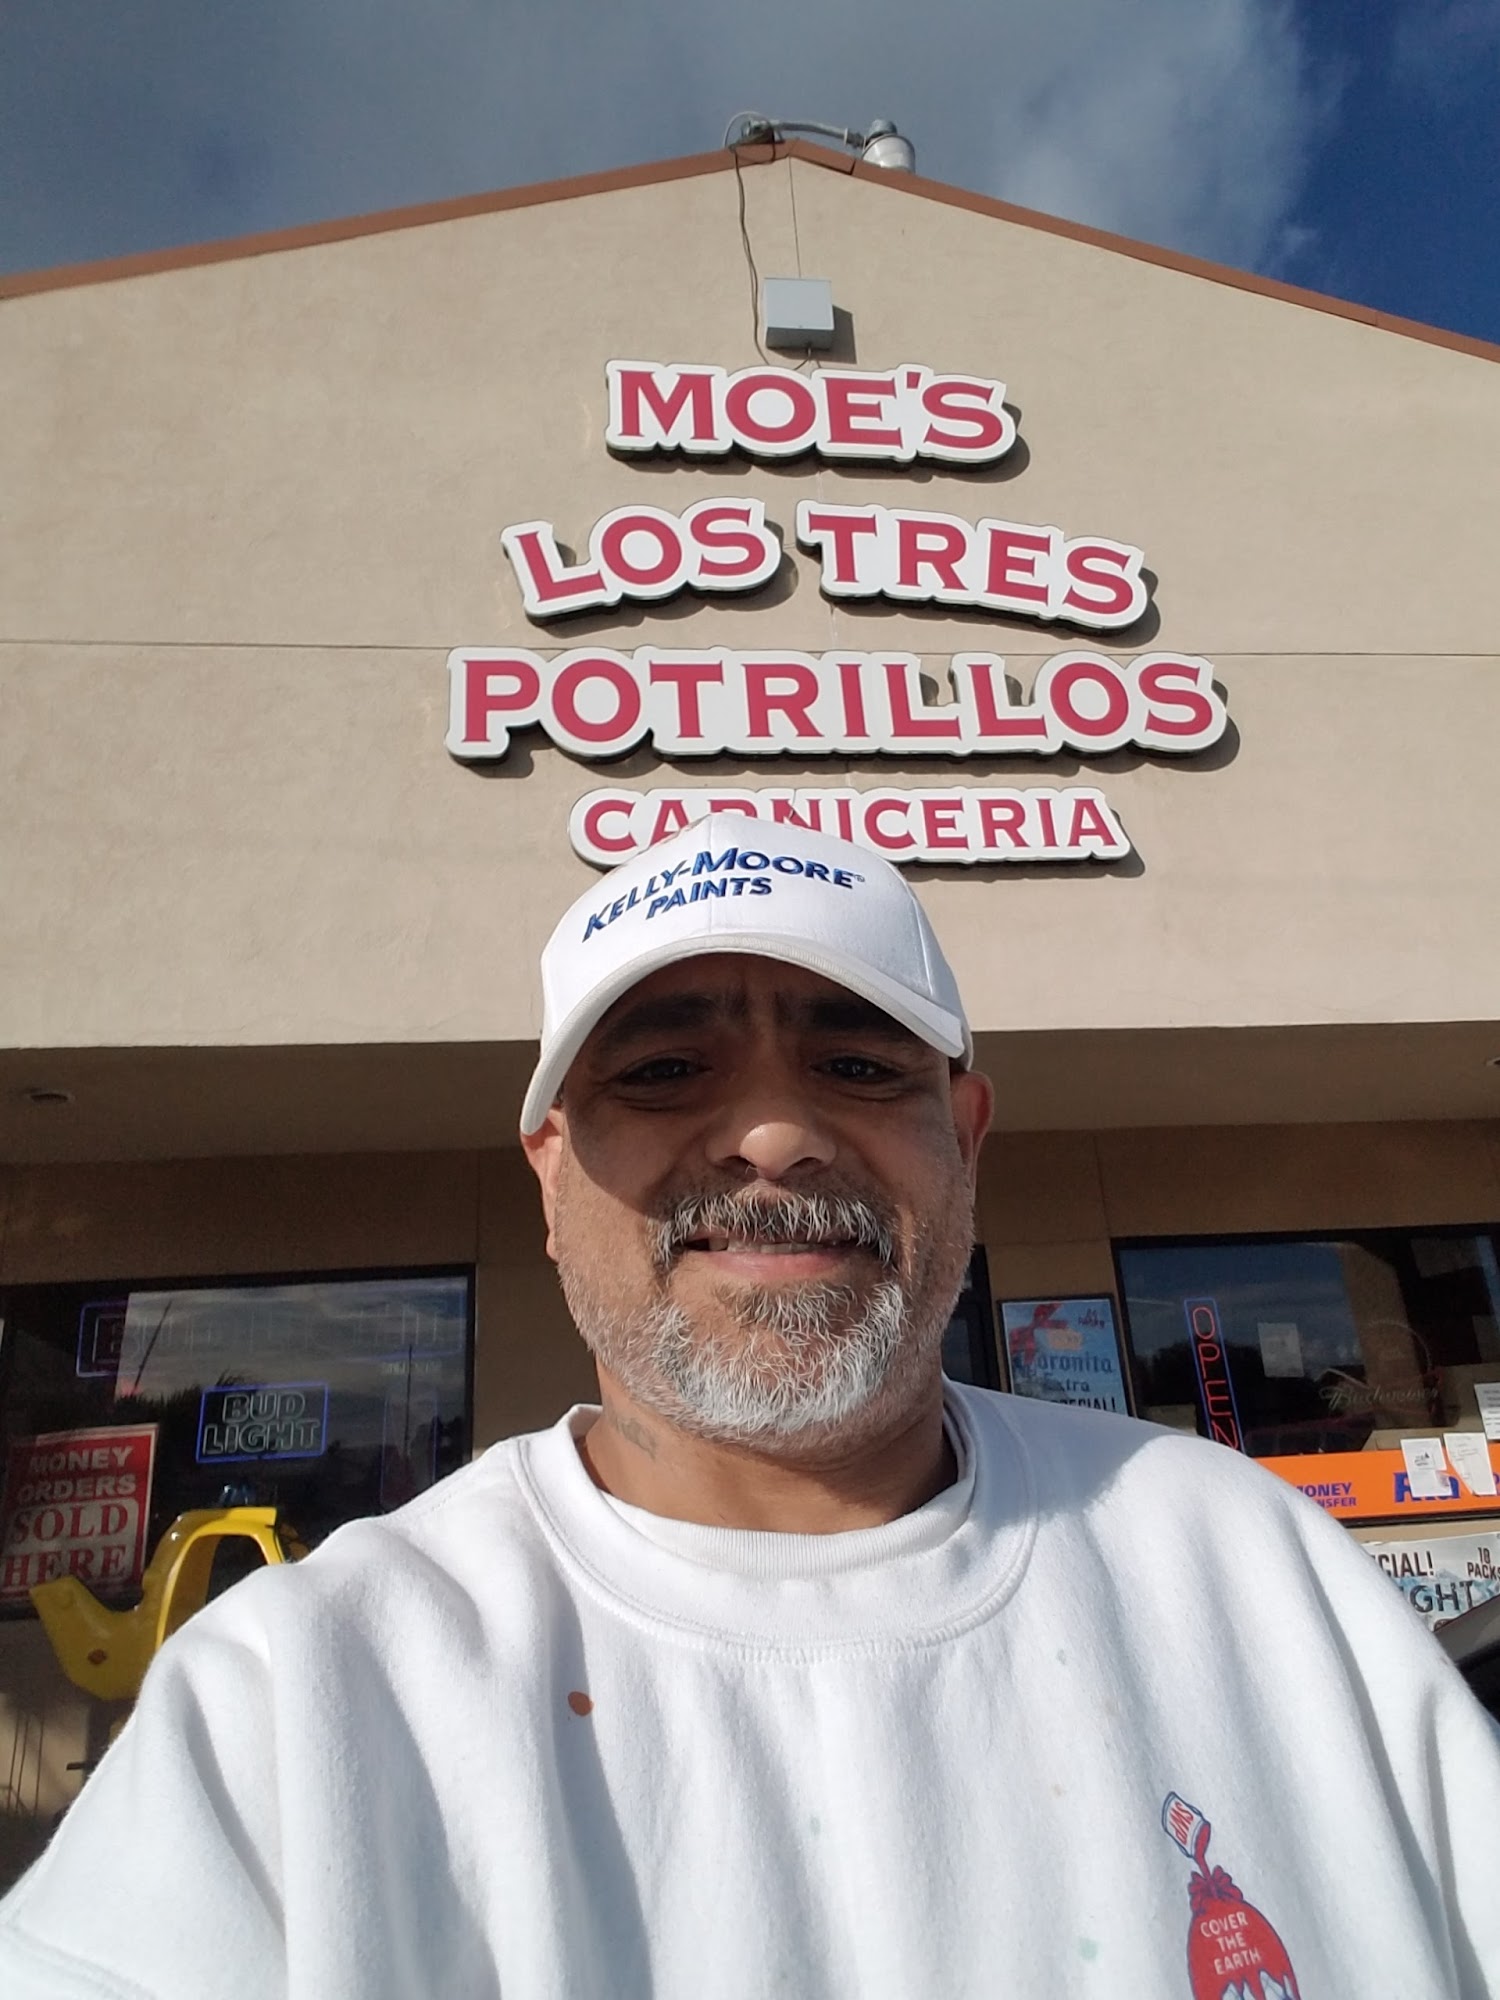 Moe's Market